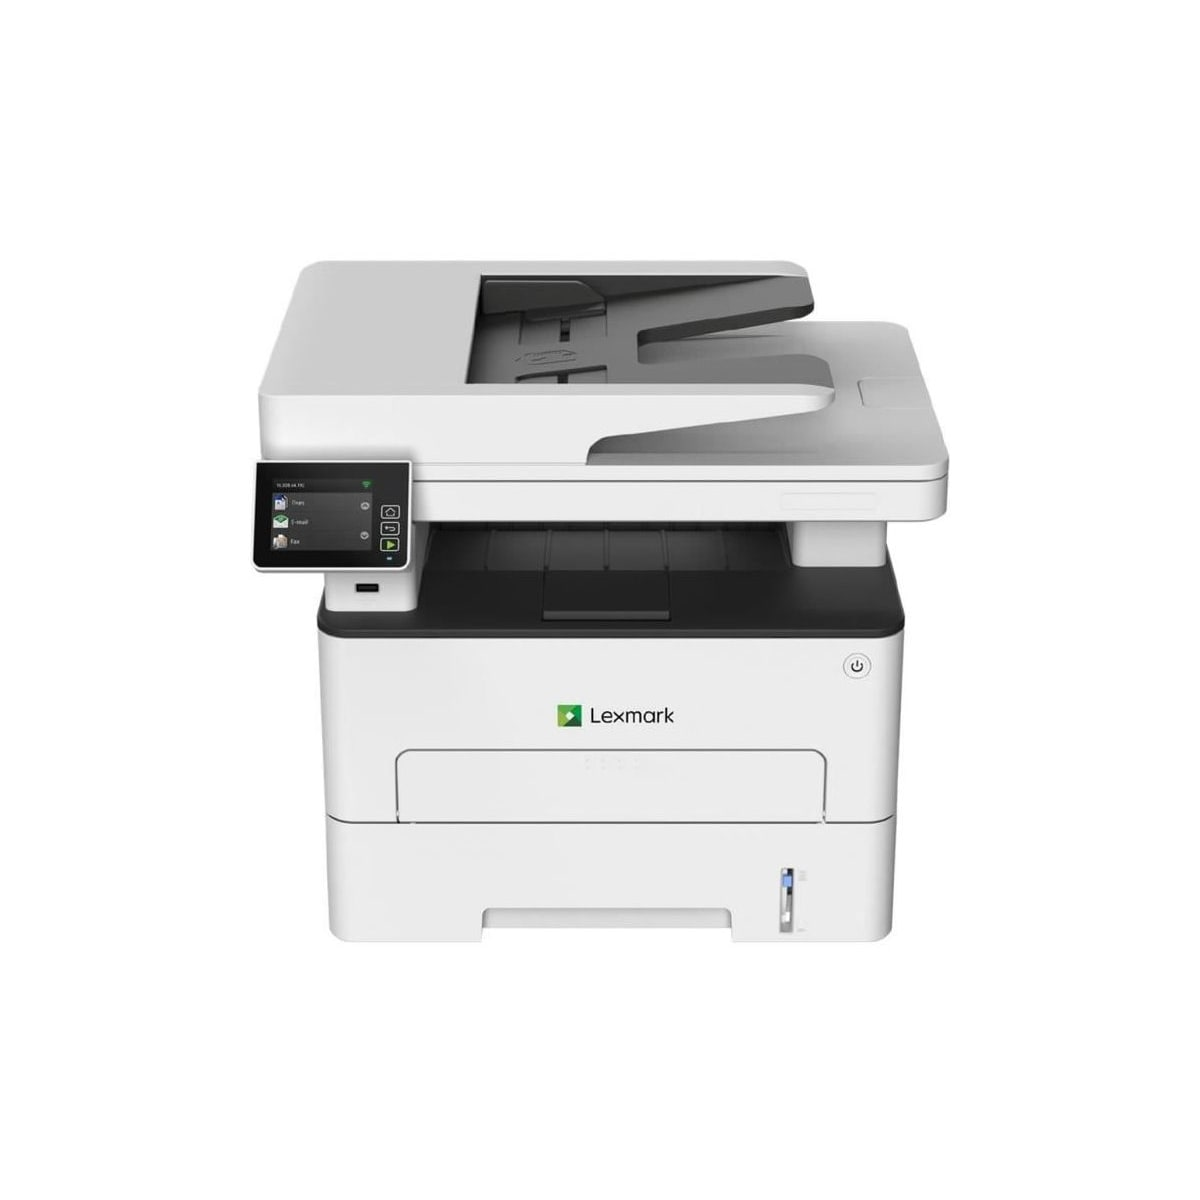 s/w 4-in-1, MB2236i Kopierer, und LEXMARK Scanner, ADF, (A4, Laser-Multifunktionsdrucker Multifunktionsgeräte Drucker Laser Cloud-Fax, Drucker,